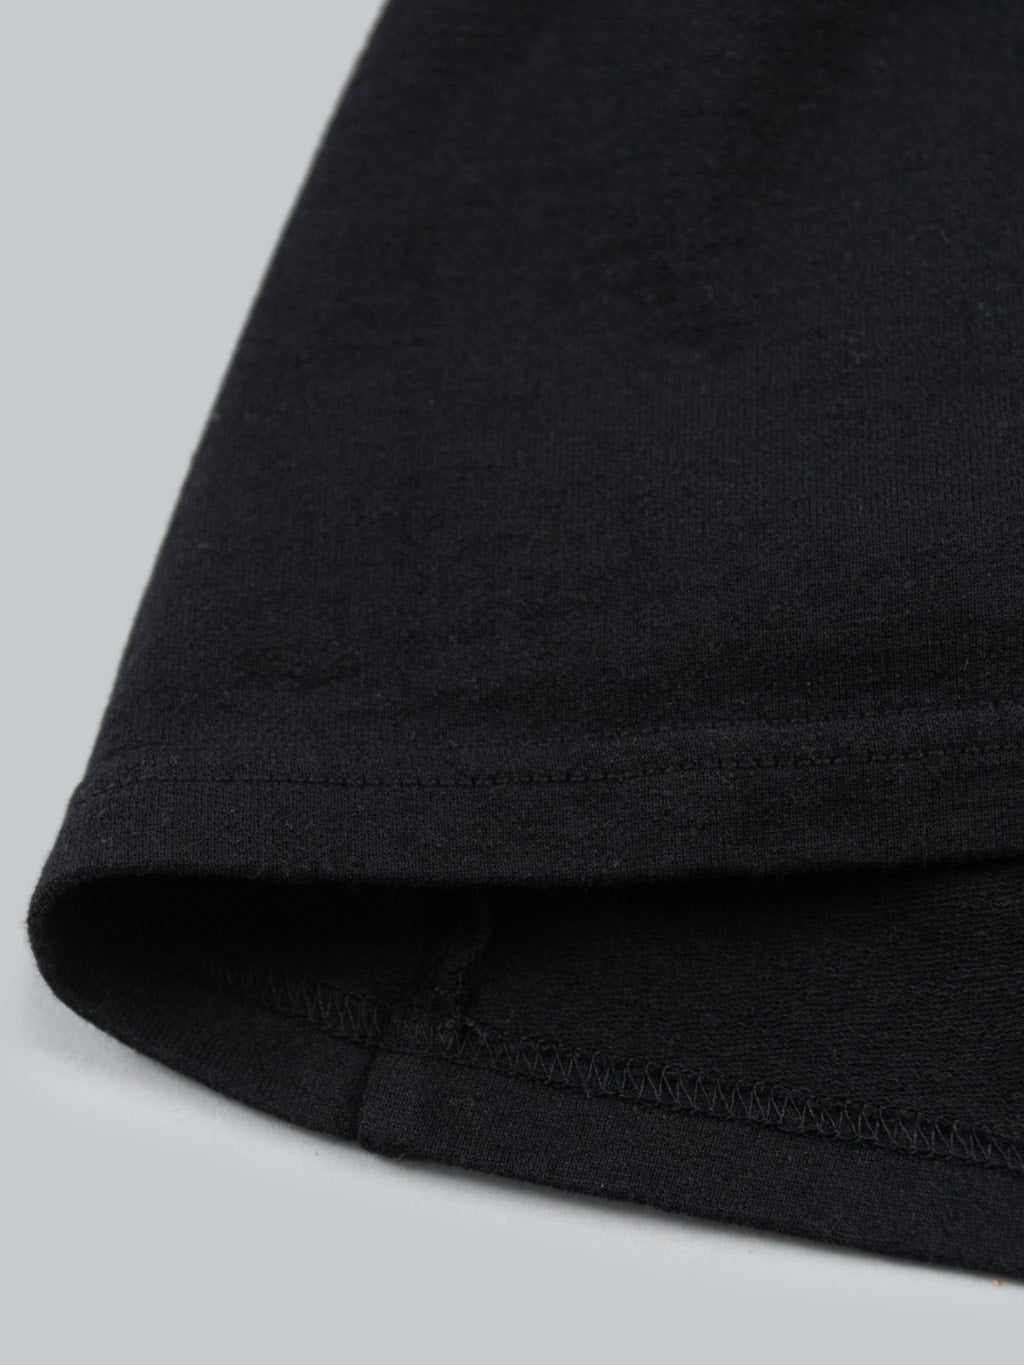 Samurai Jeans Loopwheel Ripened Cotton Tshirt Black texture